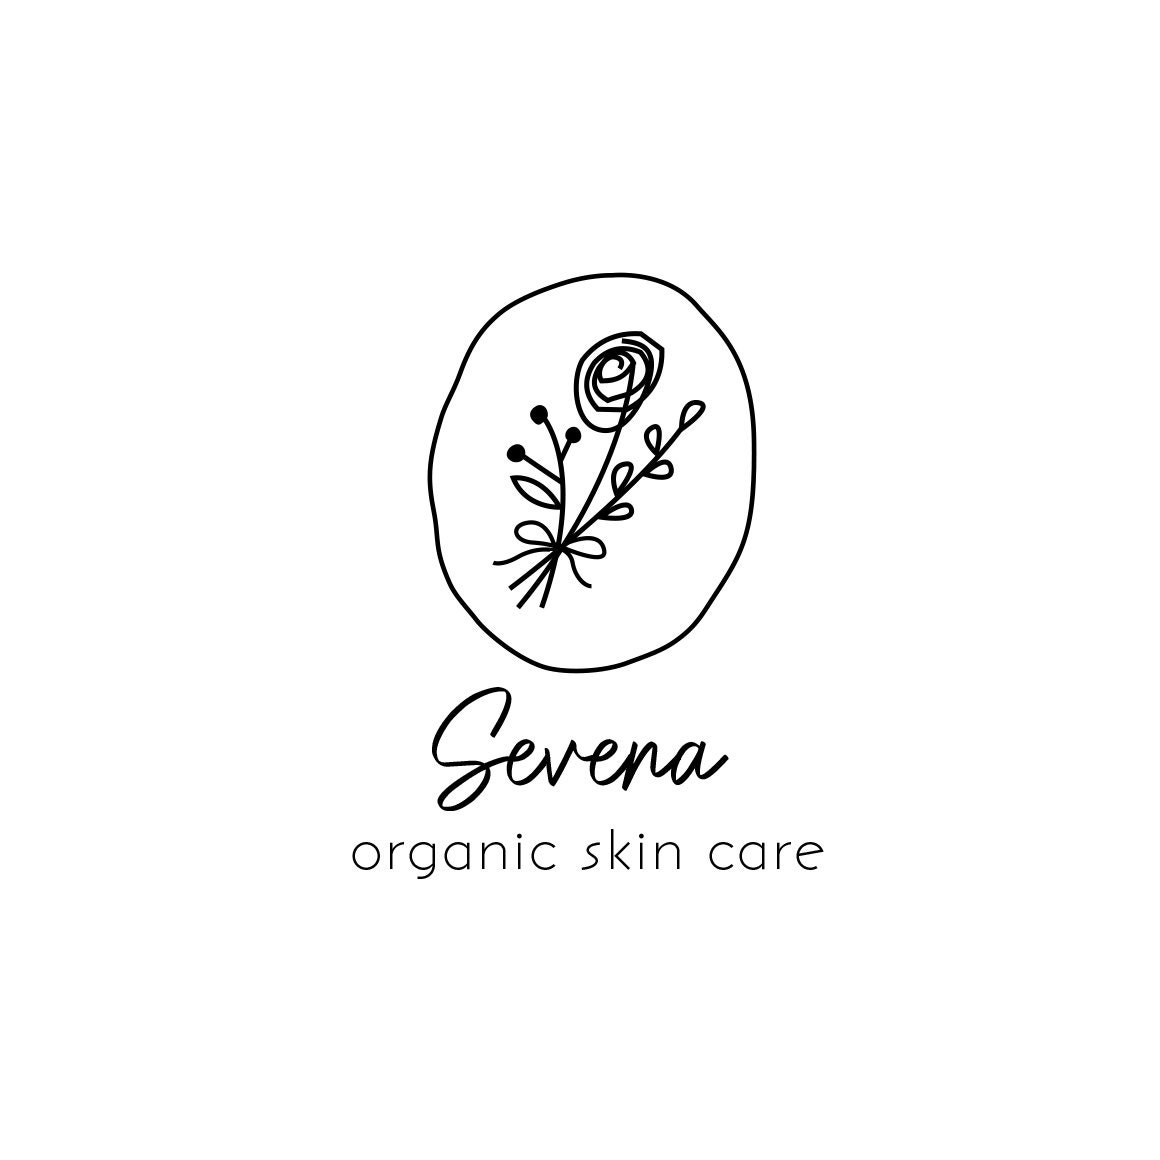 Flower logo organic logo skin care logo florist logo soap | Etsy